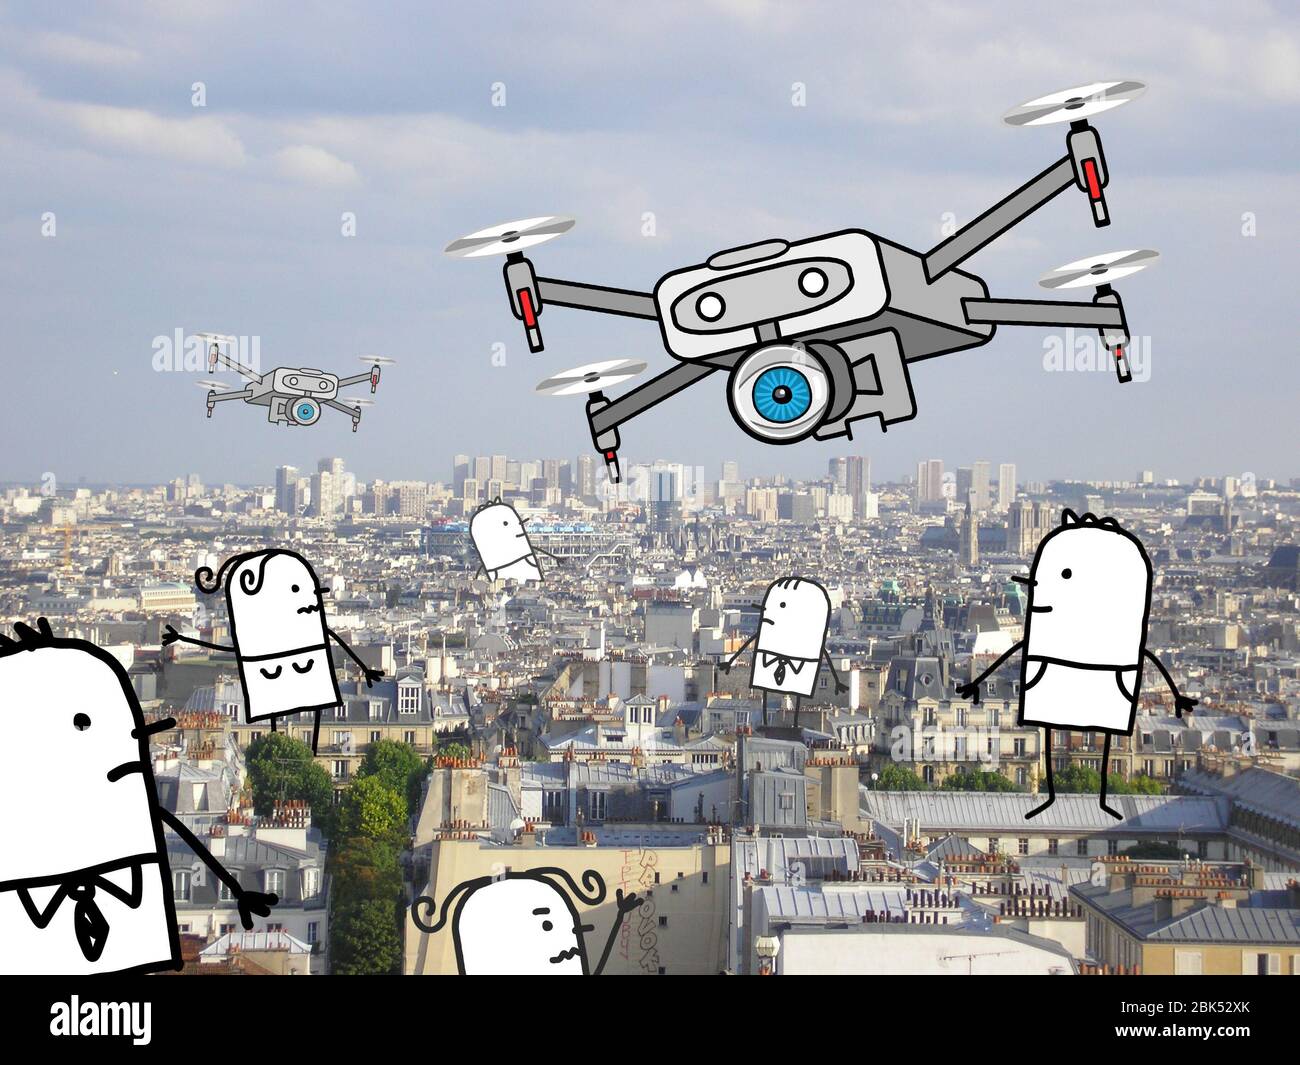 Dessin à la main les gens de dessin de dessin de dessin de drones avec grand oeil, survolant une grande photo de ville Banque D'Images